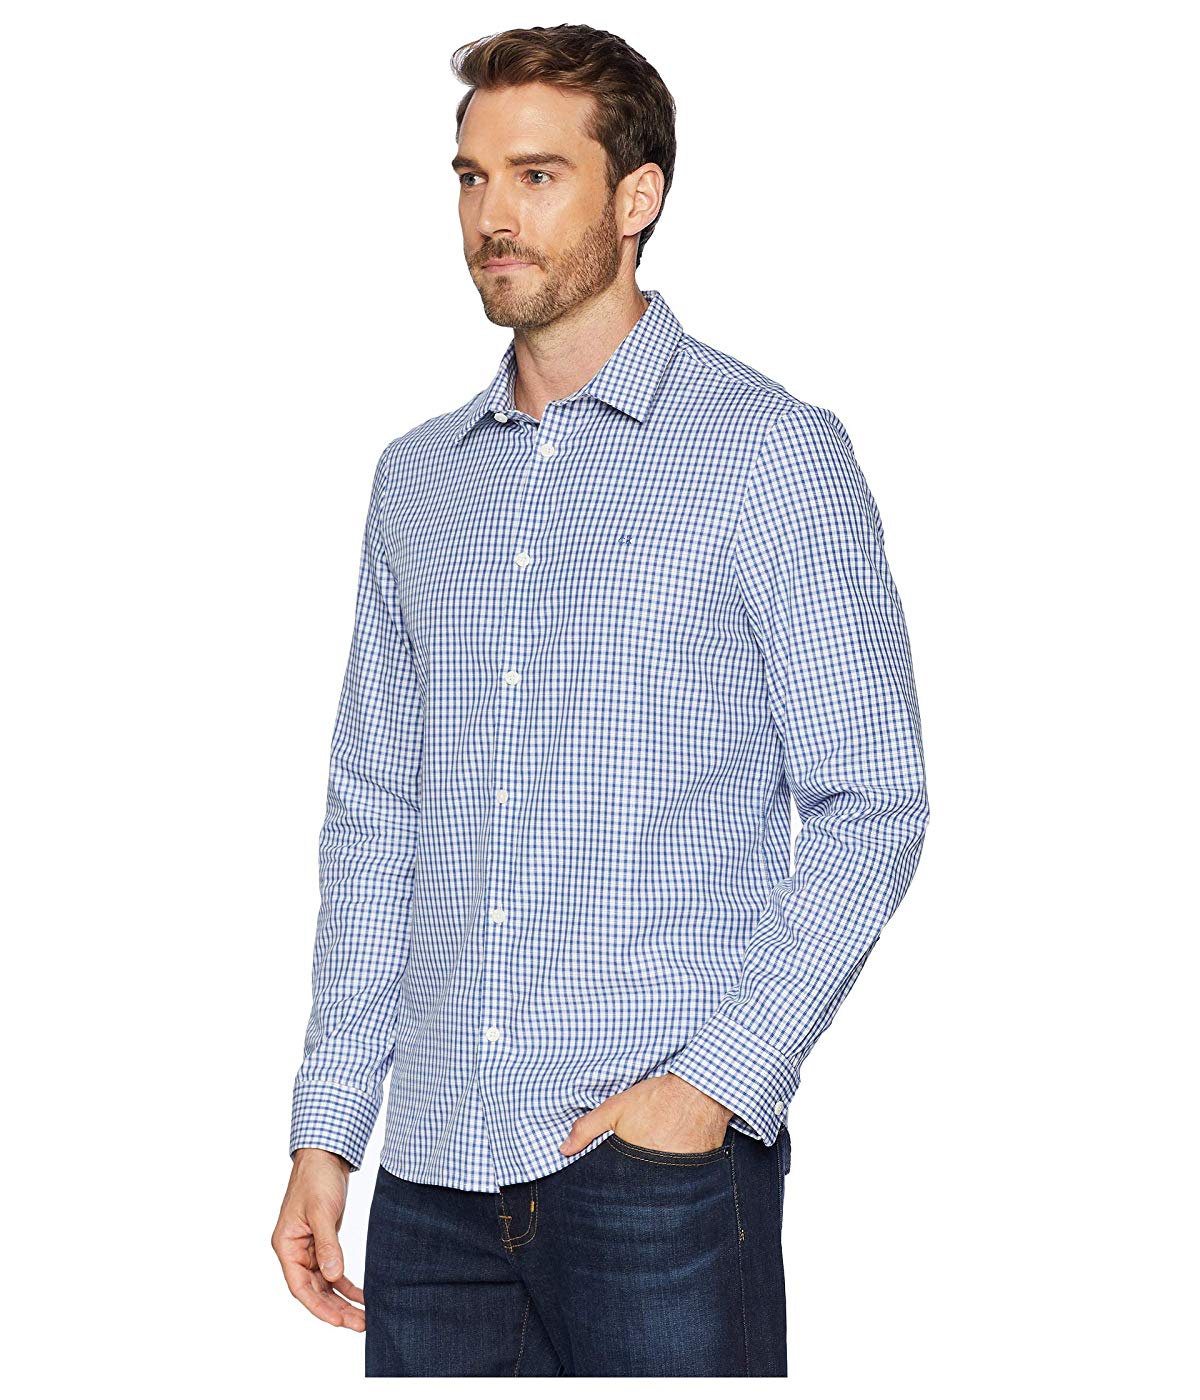 Buy Calvin Klein The Cotton-Cashmere Shirt Ocean Breeze Online at Lowest  Price in Ubuy Qatar. 957703593